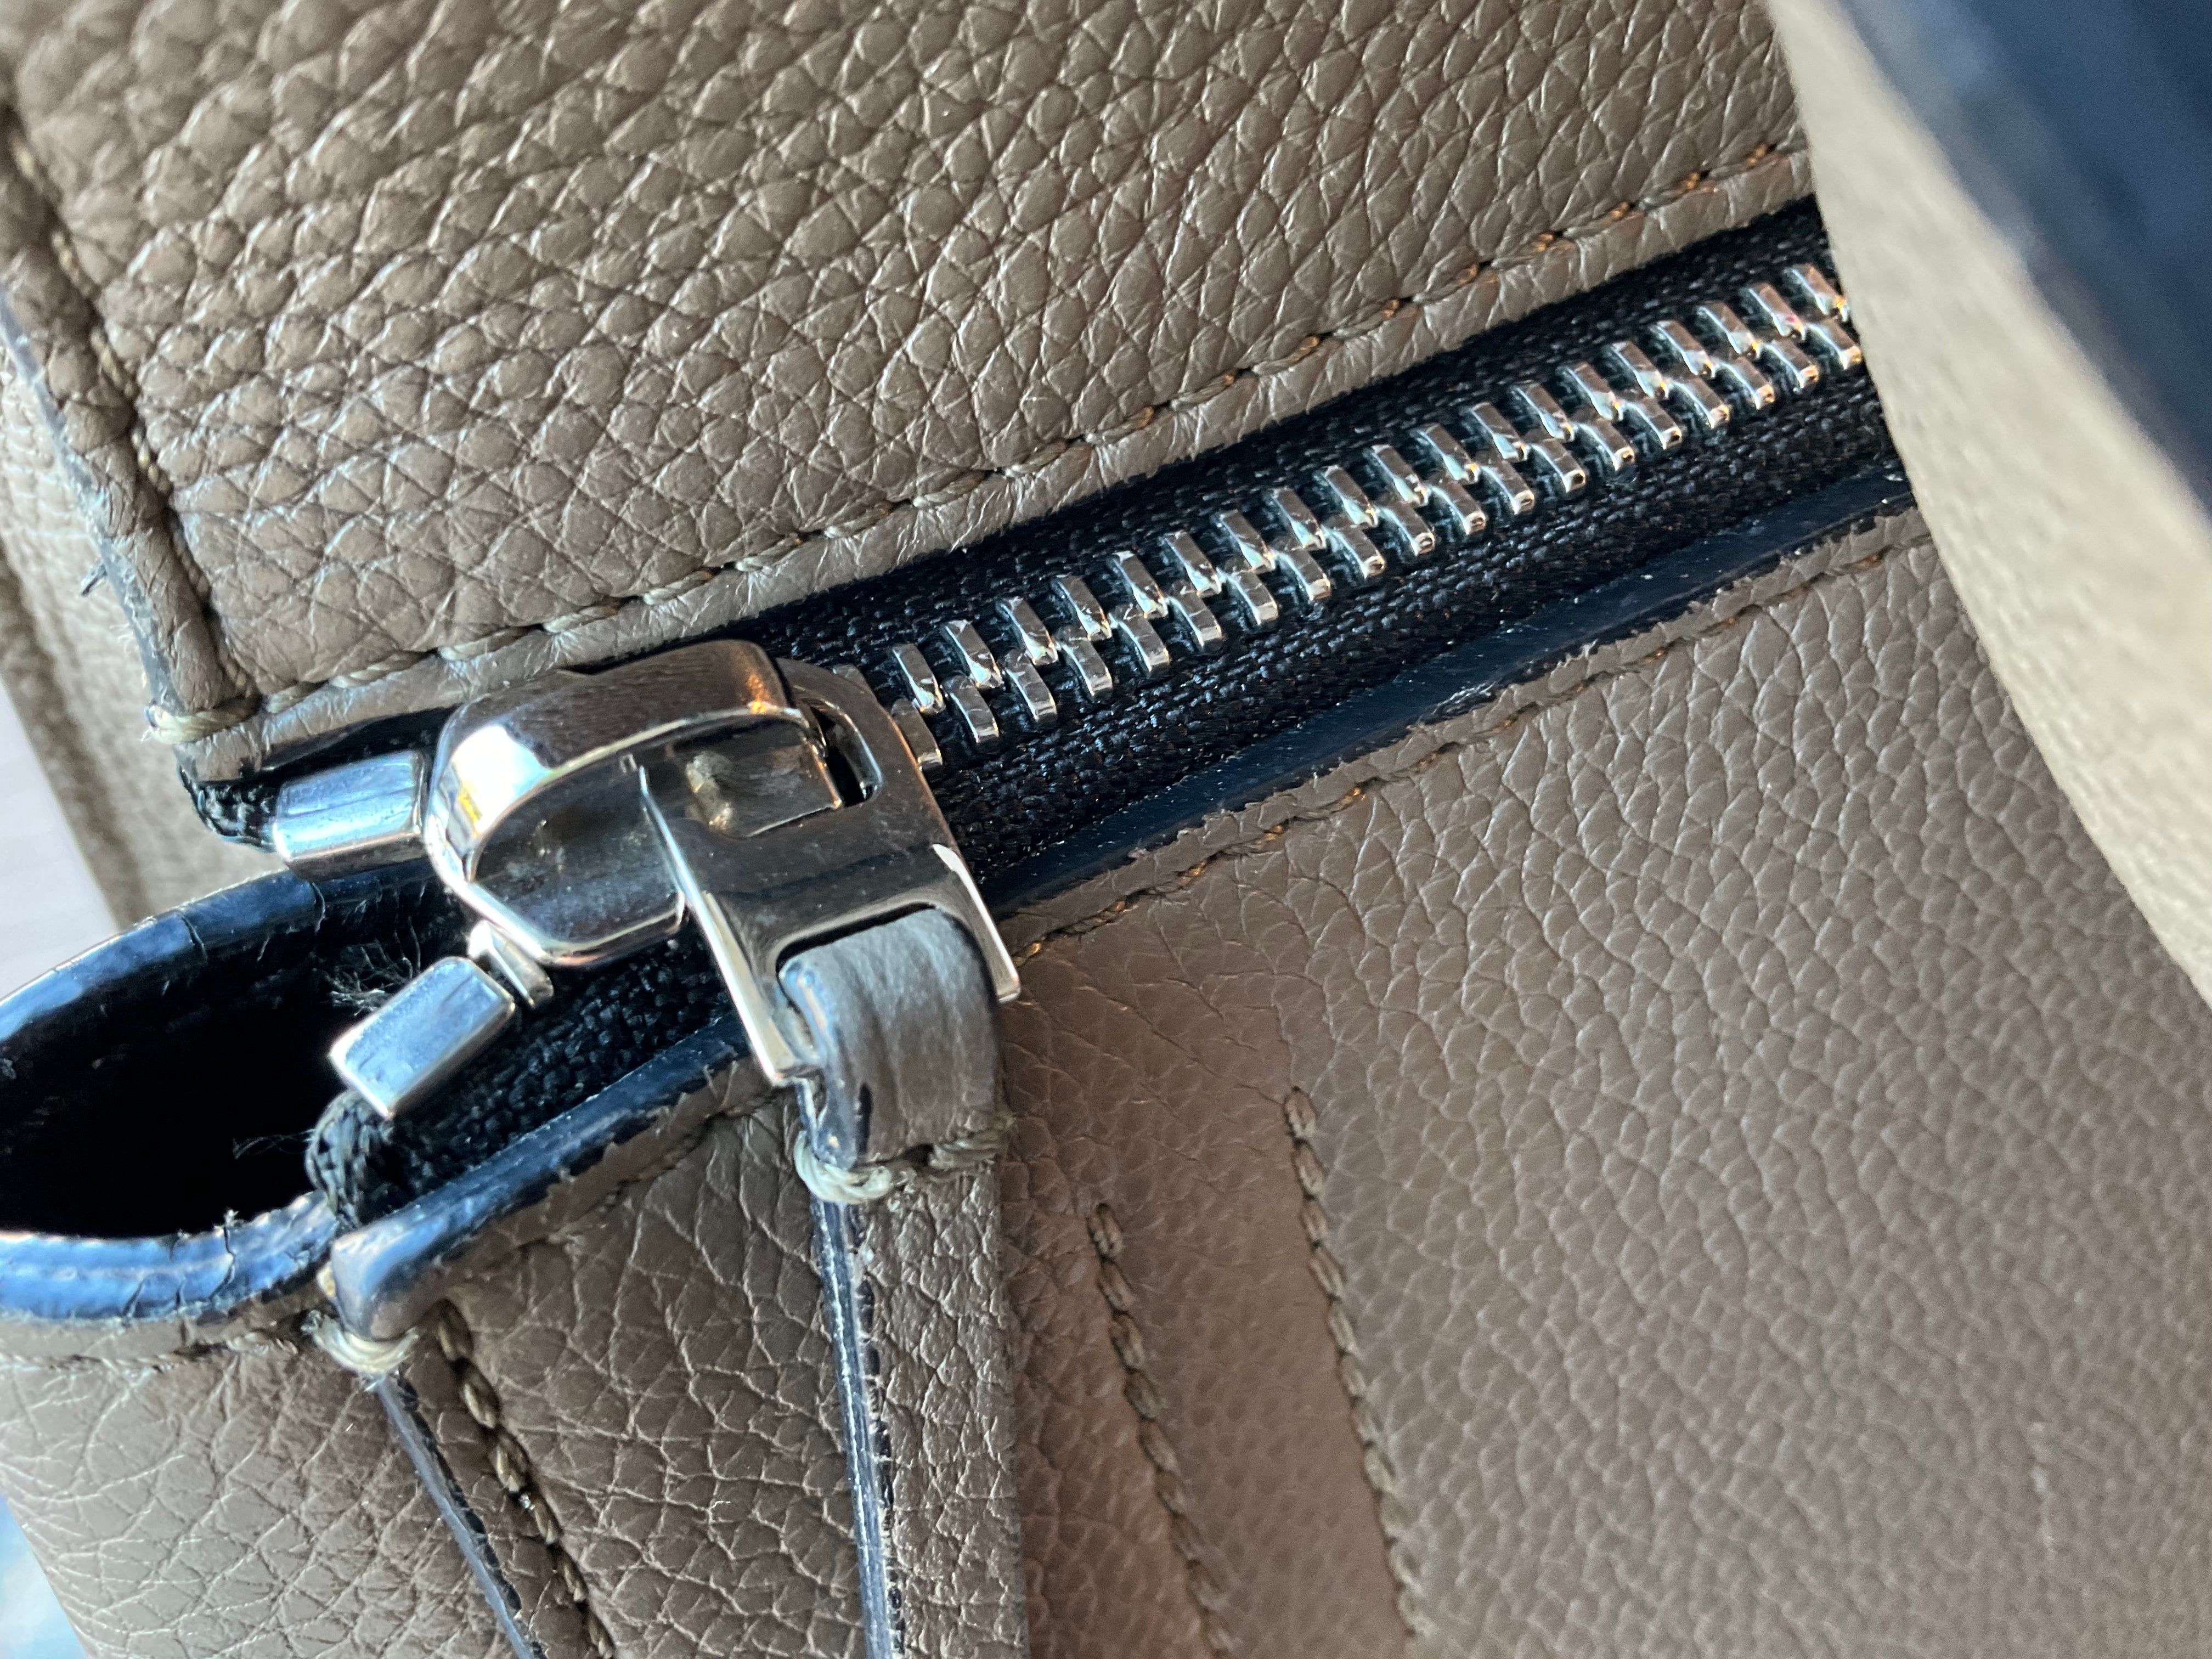 Celine Edge Medium Handbag- Authenticated